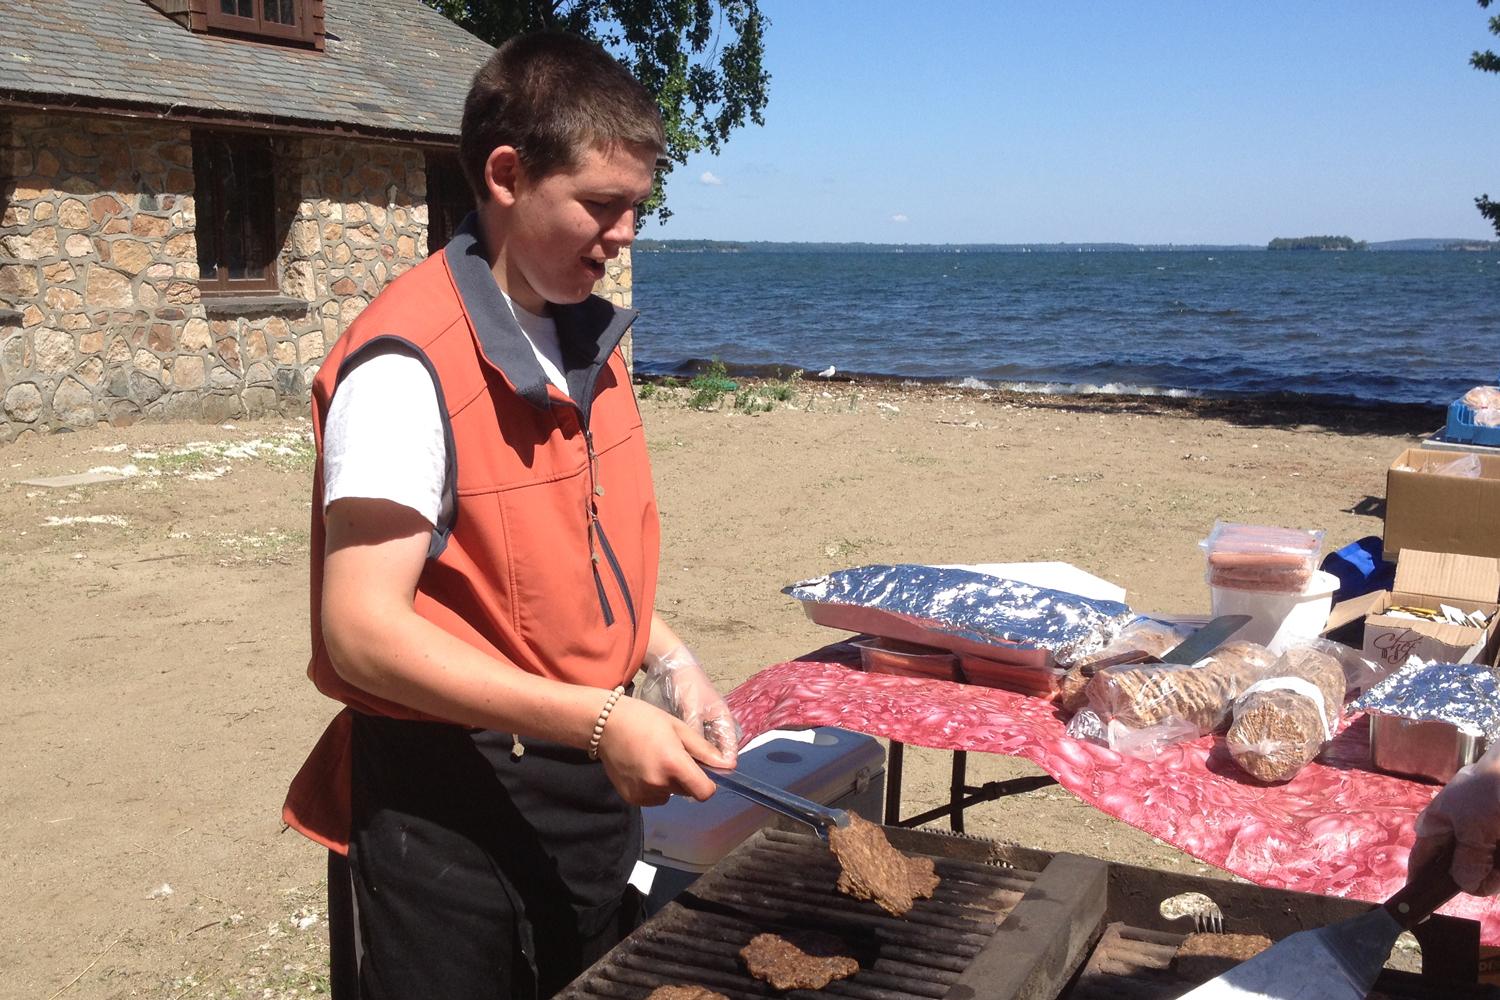 A young man grills hamburgers outdoors